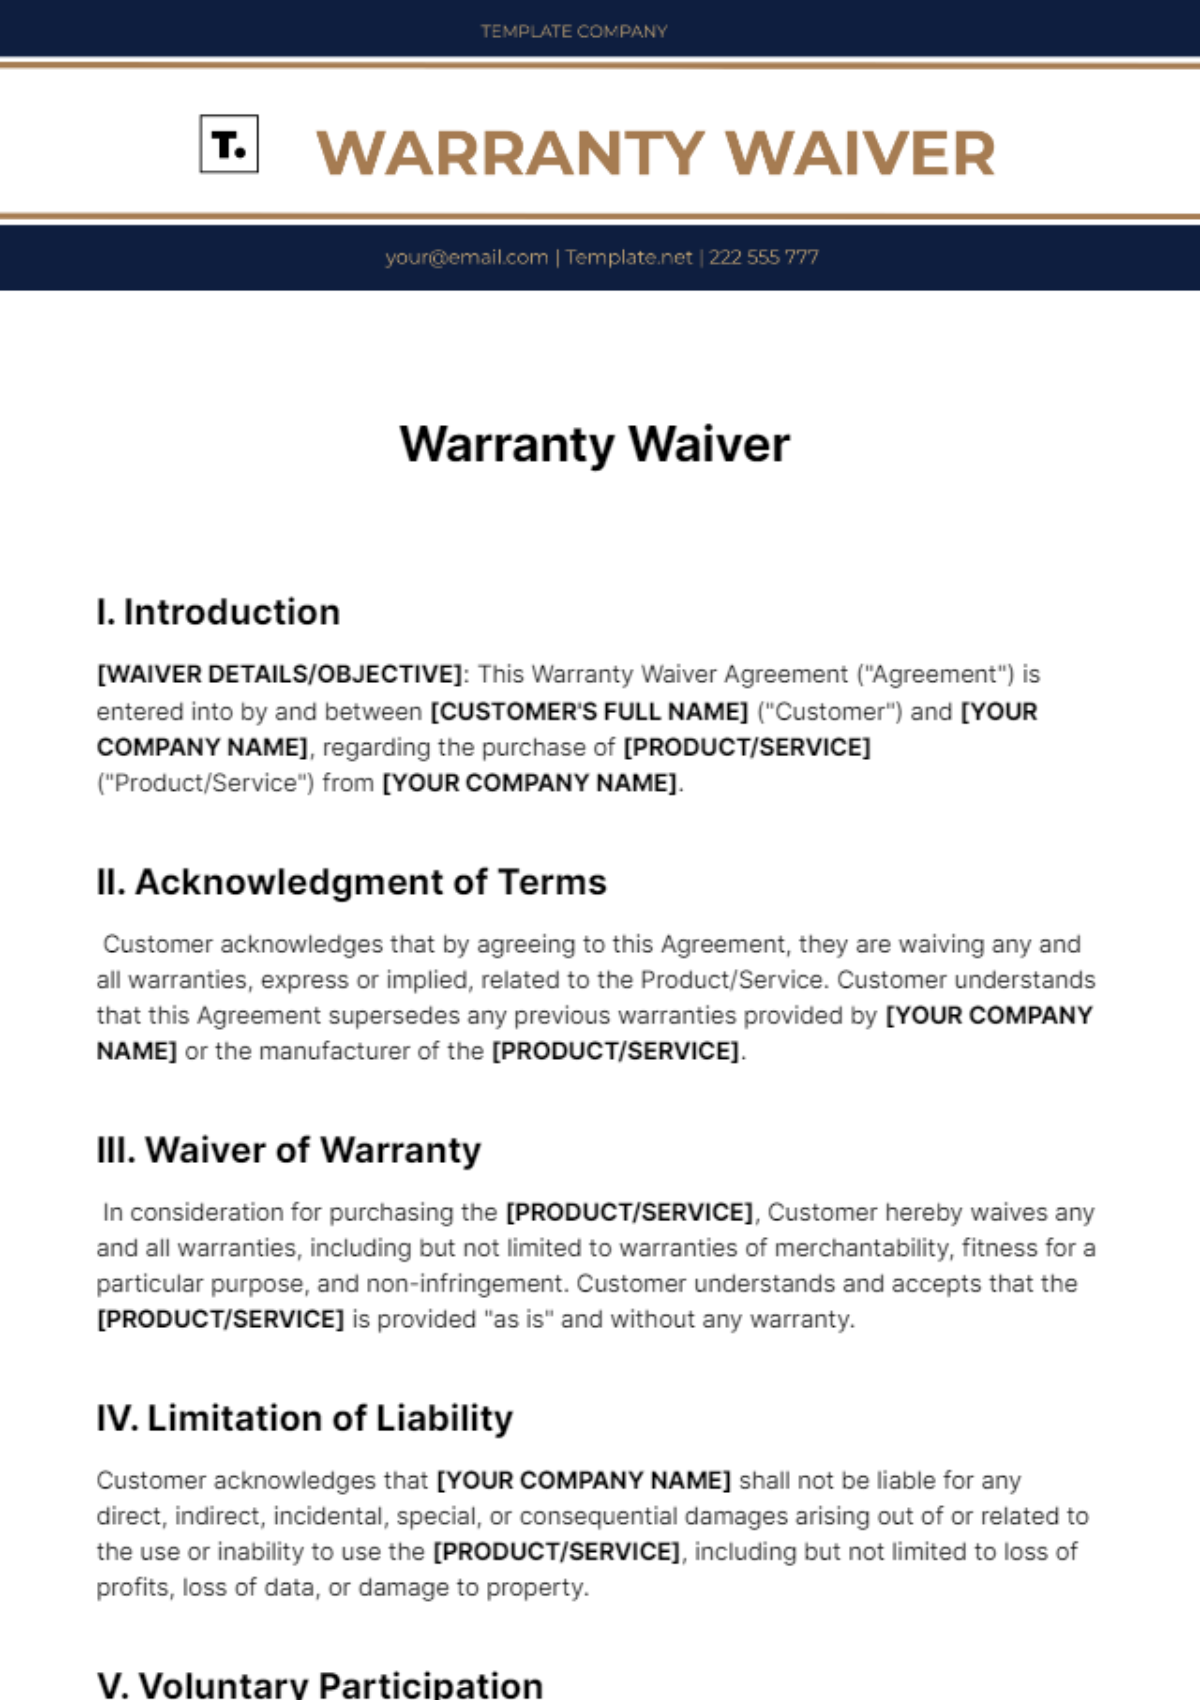 Warranty Waiver Template